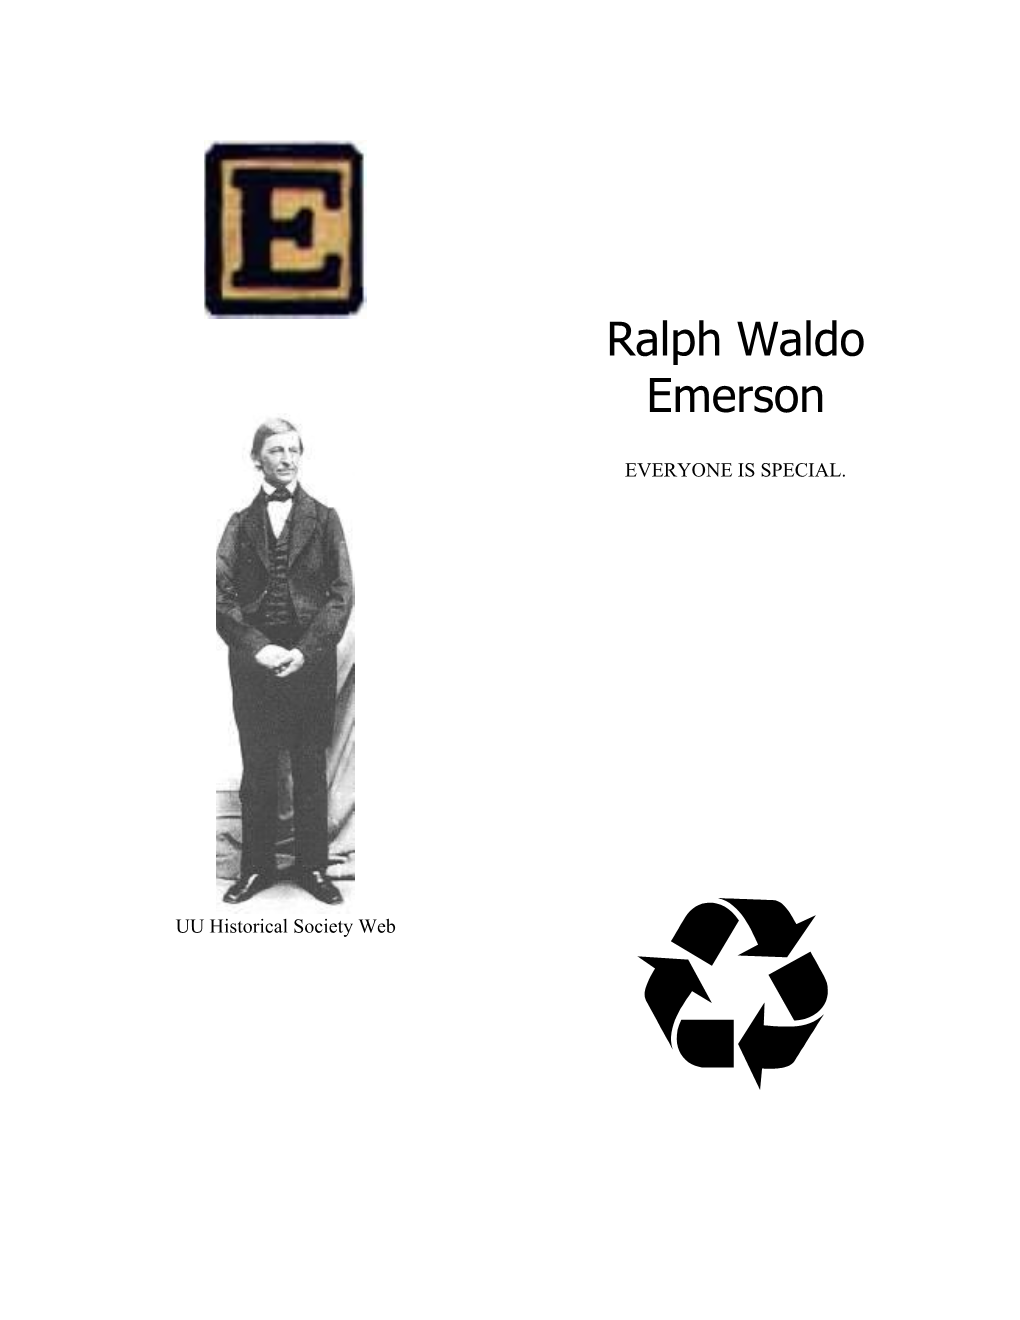 E E Letter E Introduces Ralph Waldo Emerson, the Concept of Es